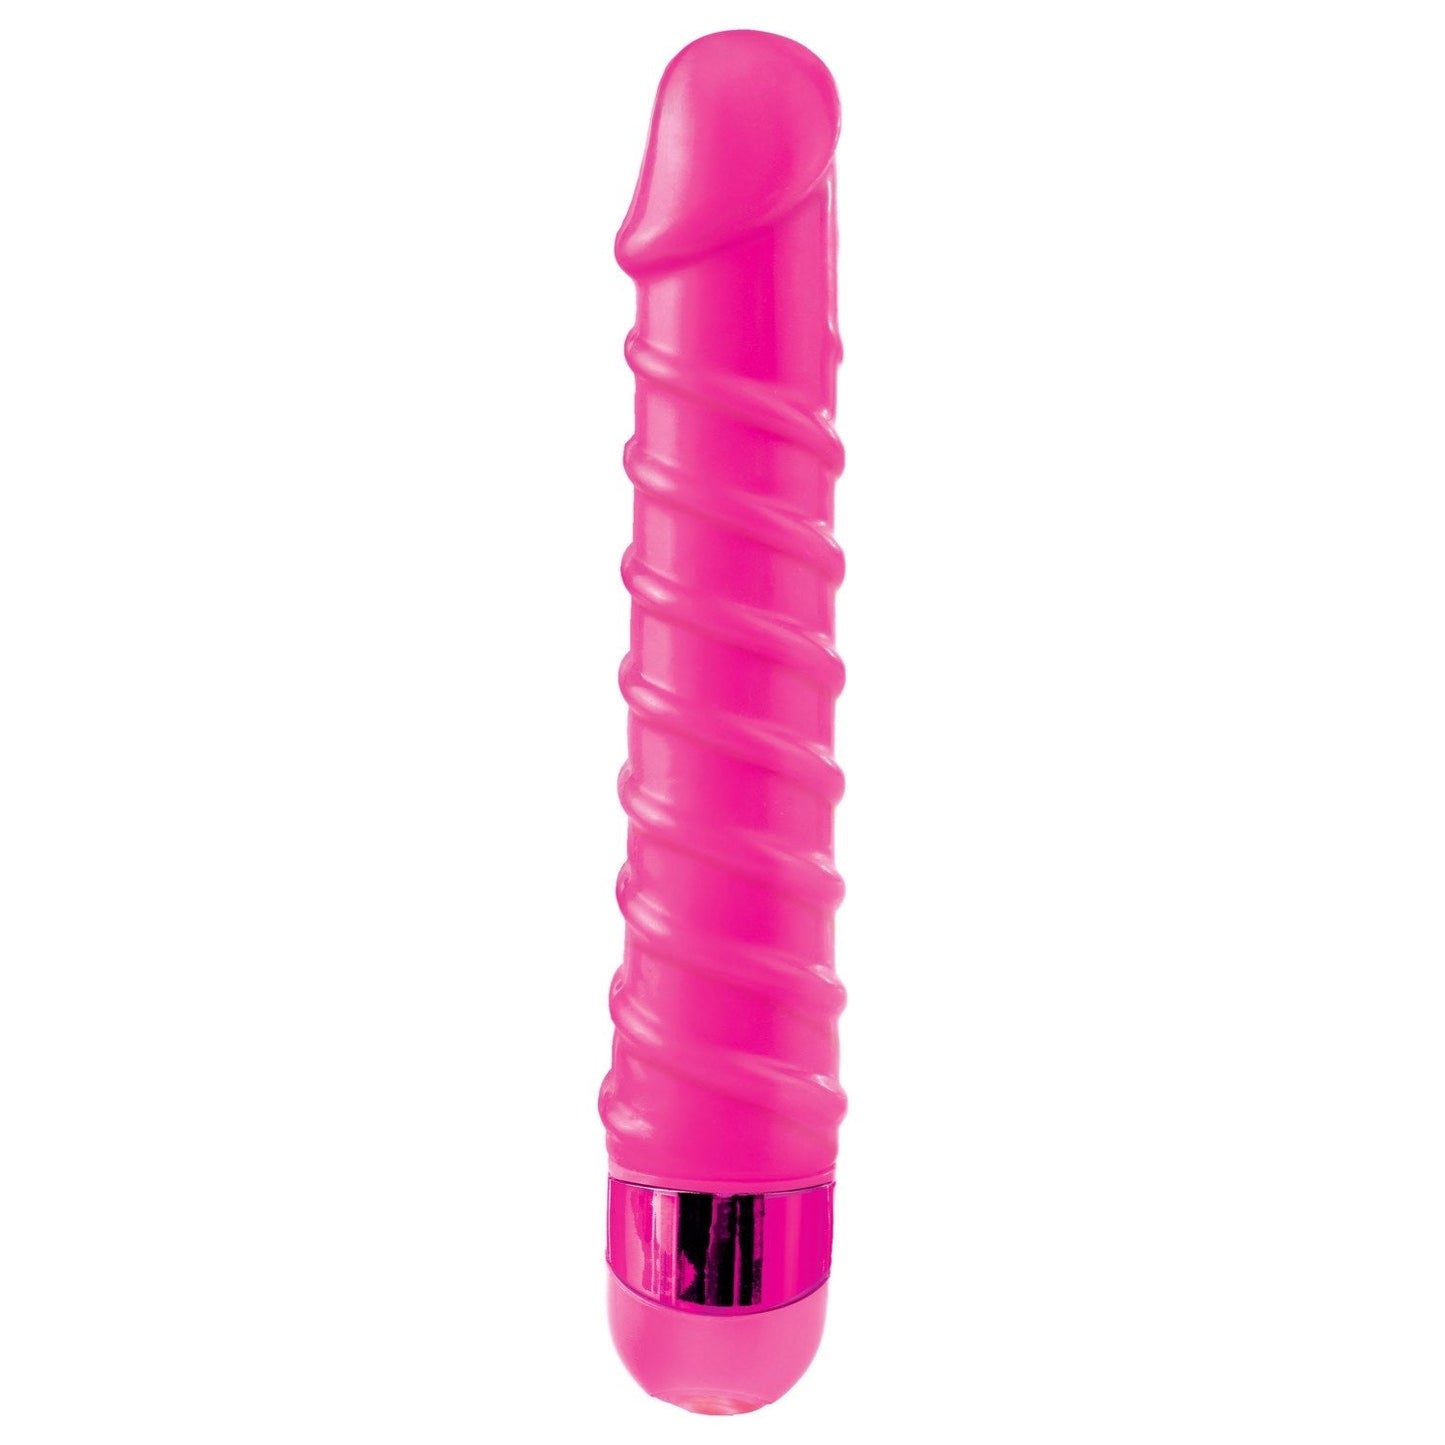 Candy Twirl - Pink 16.5 cm Vibrator